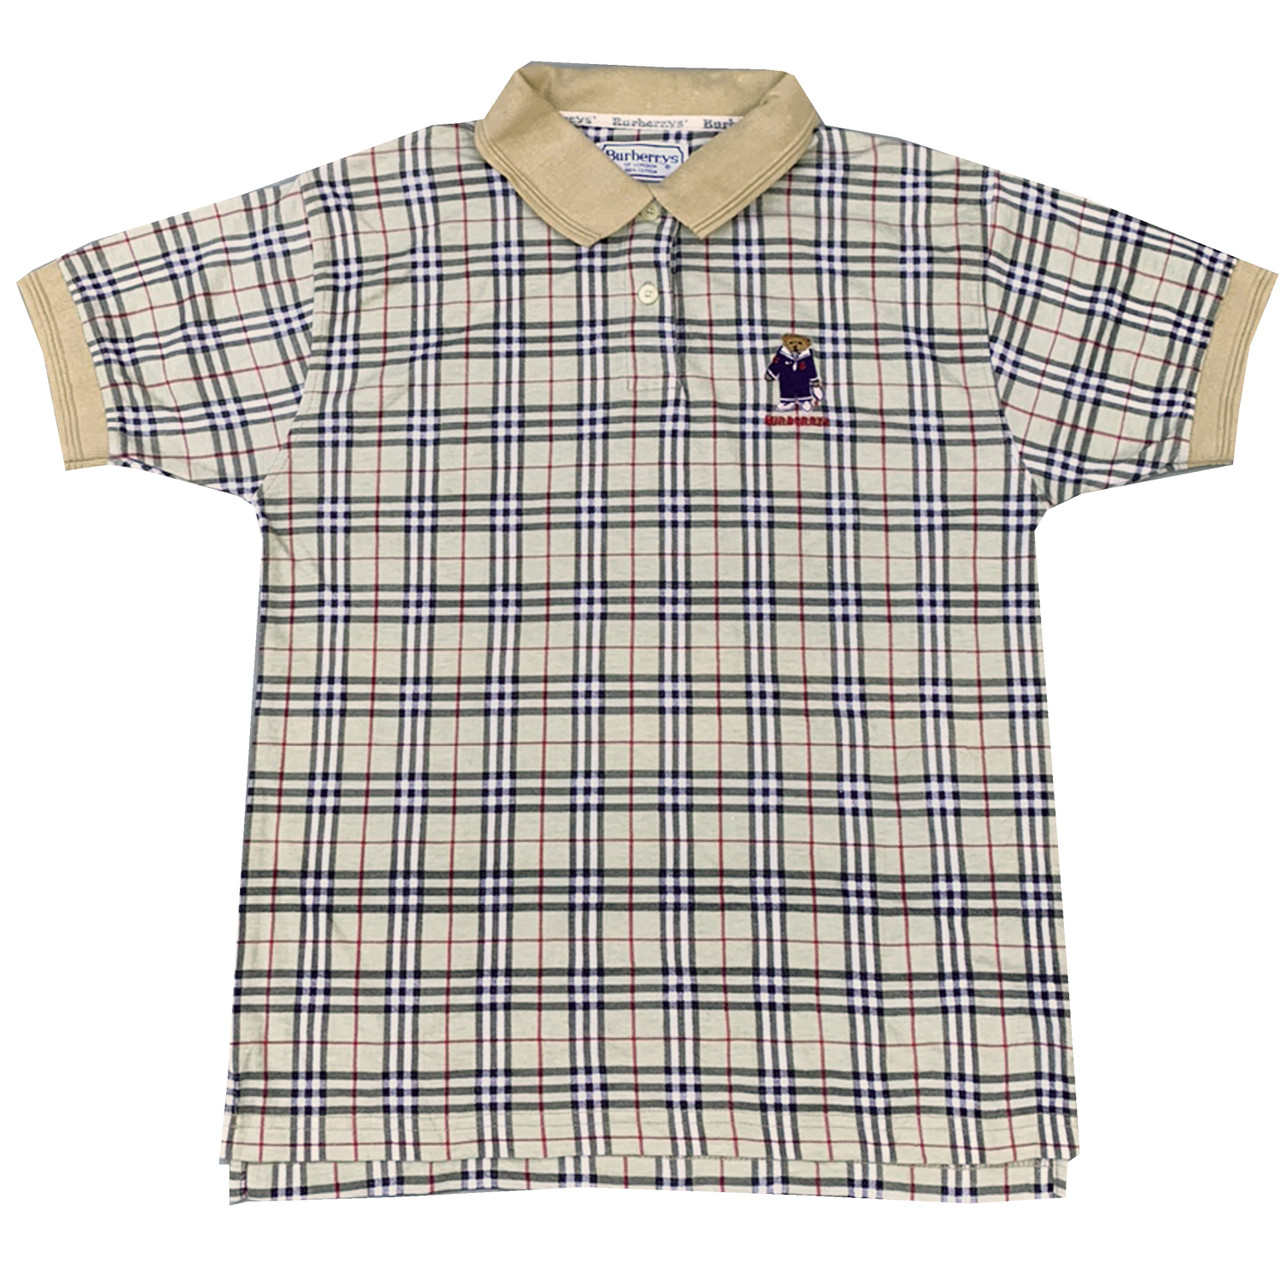 burberry nova check shirt vintage